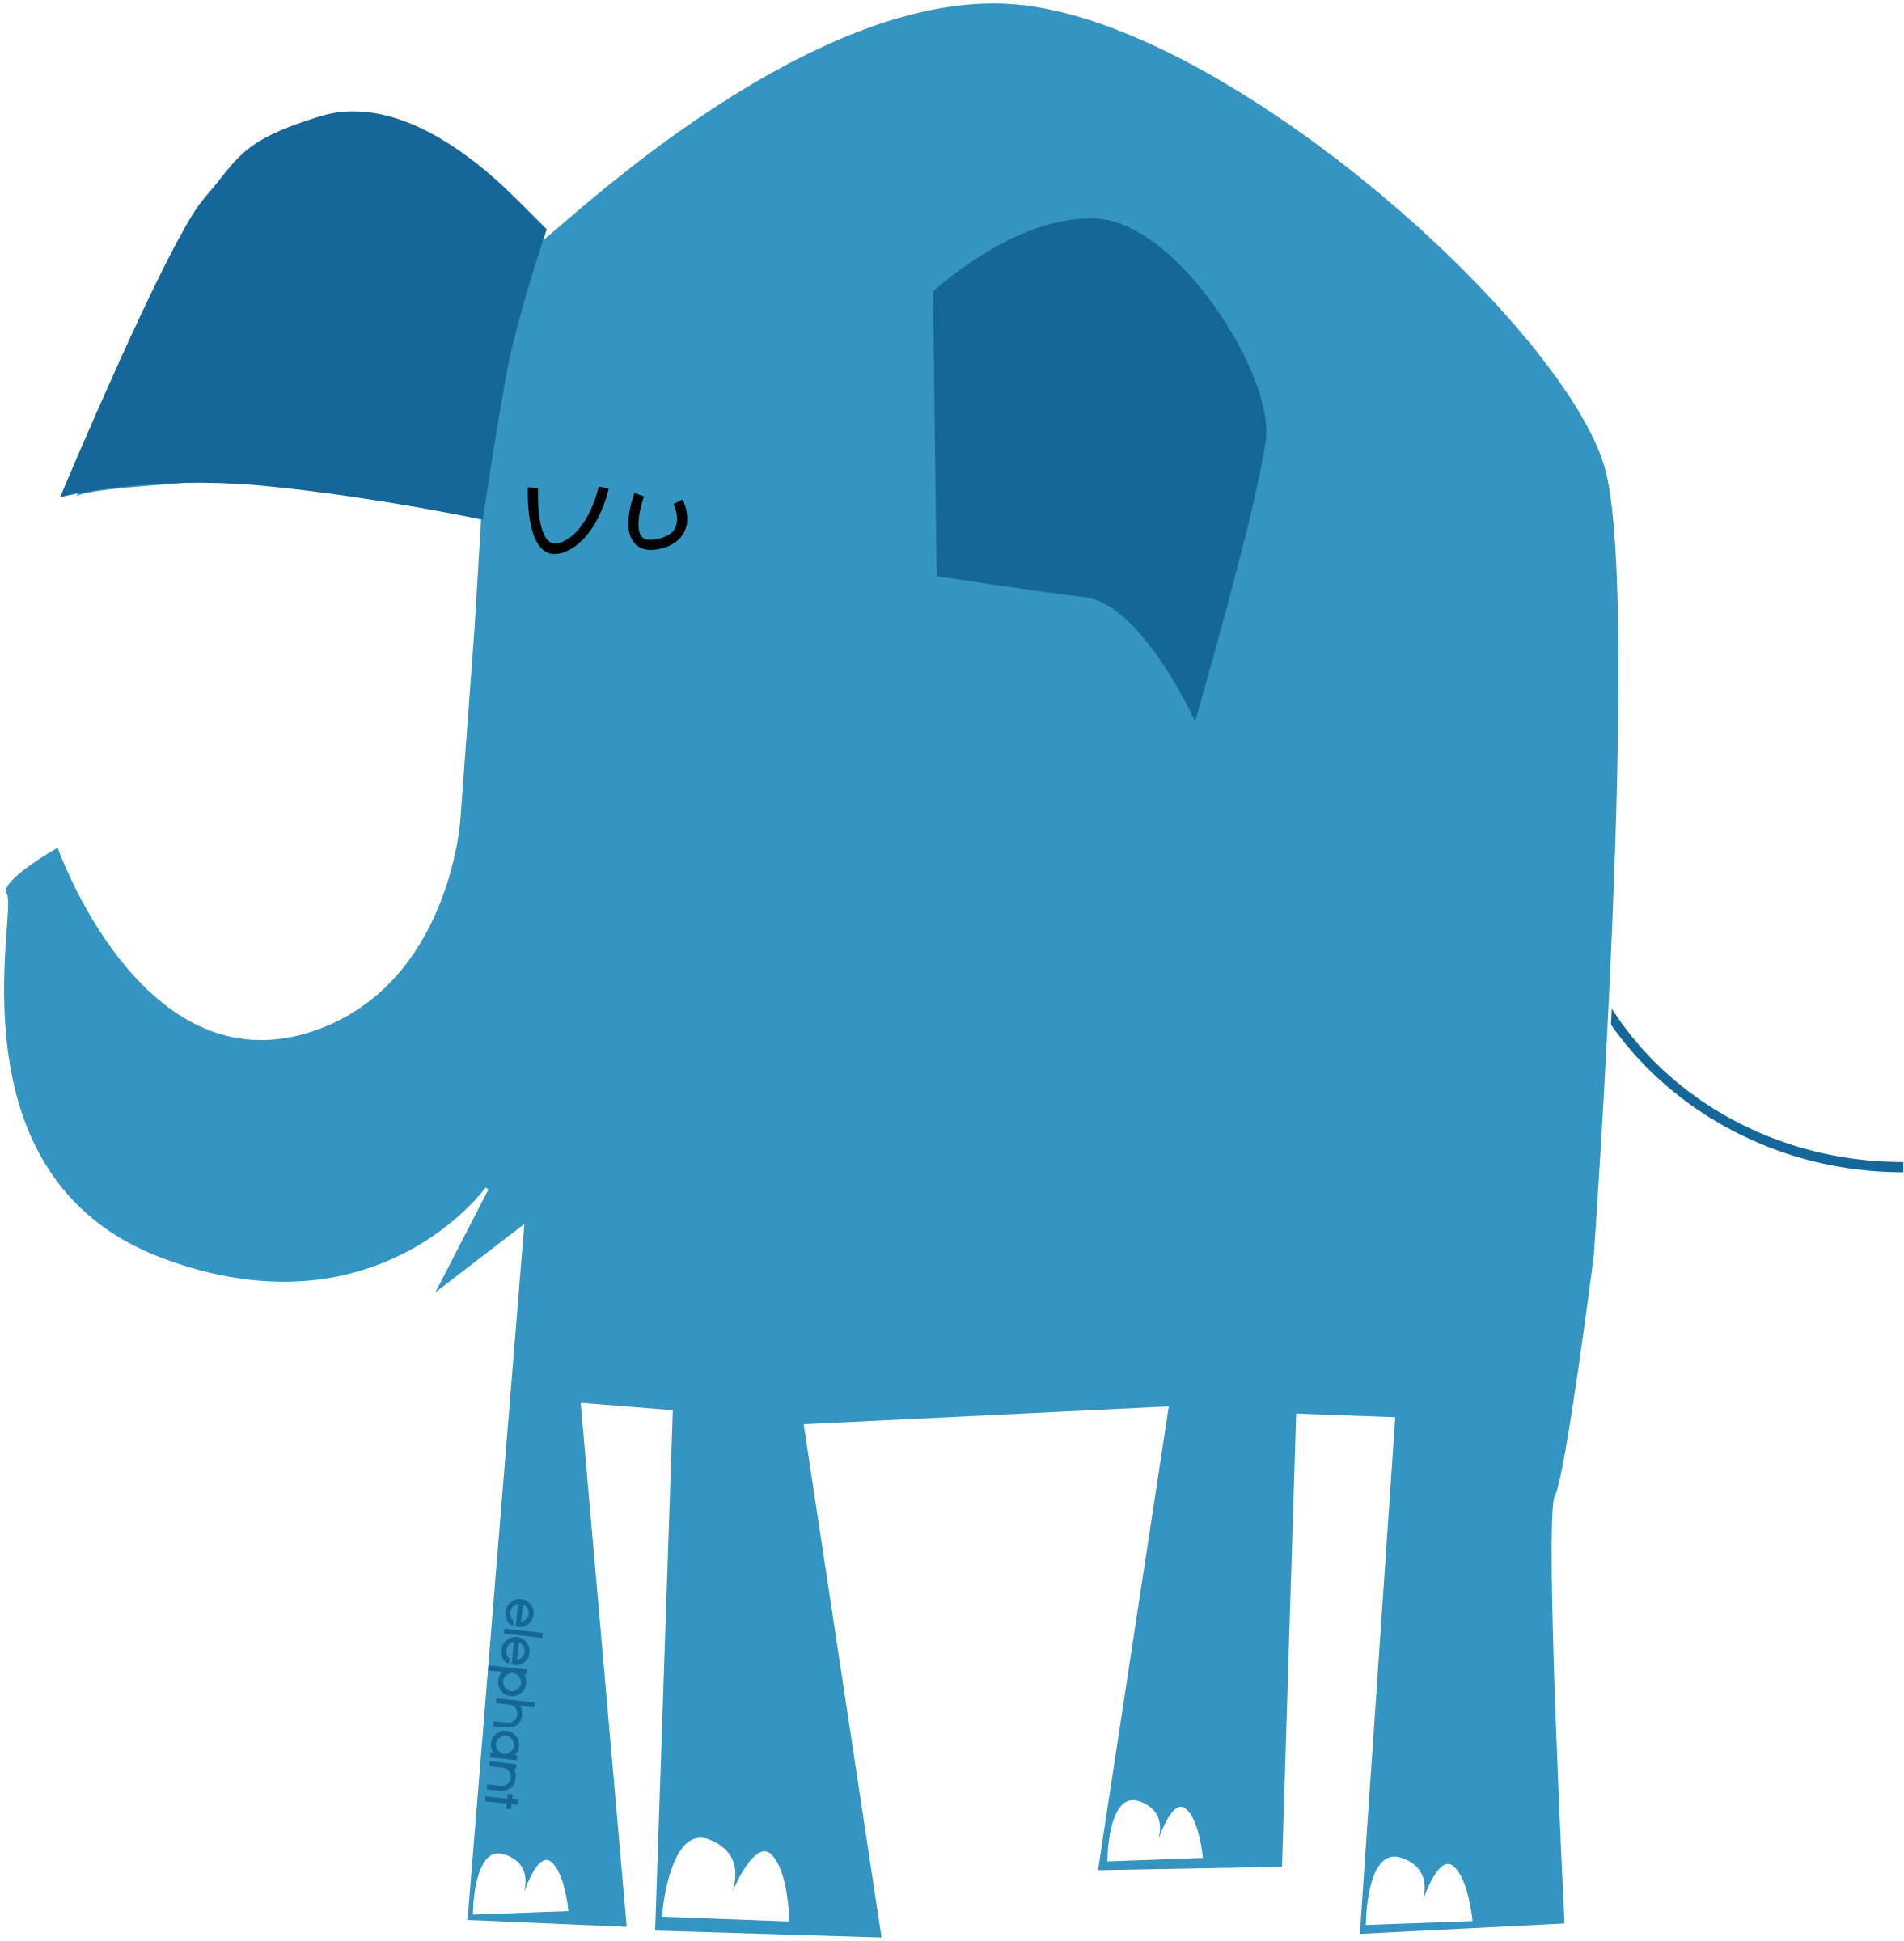 Blue Elephant SVG Clip arts